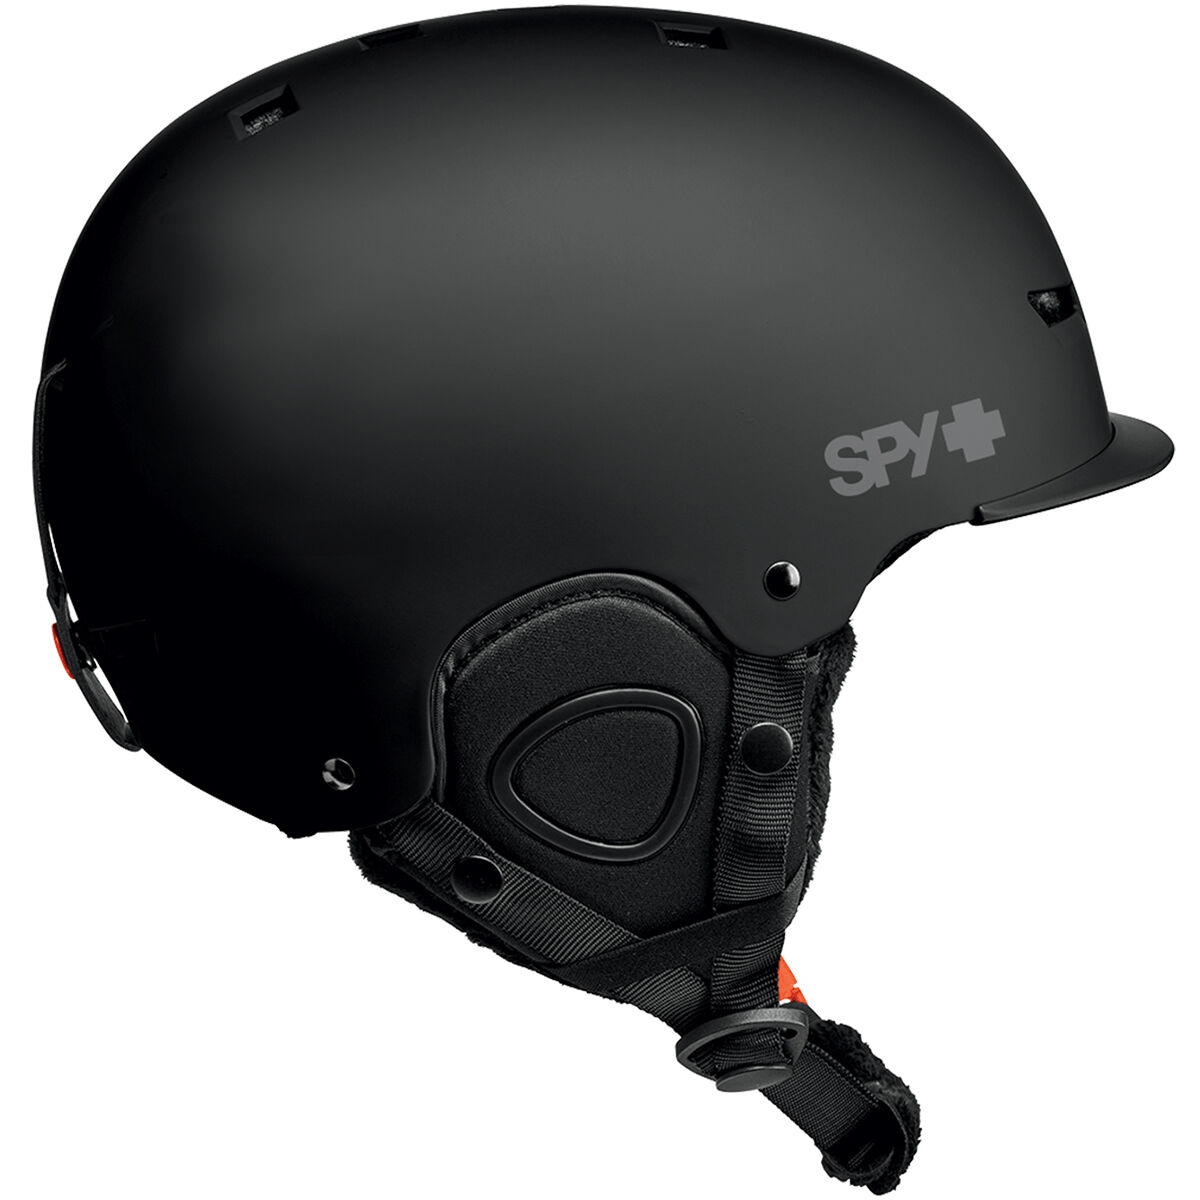 SPY Snow Helmets - MIPS Brain Protection | Protect Ya Head